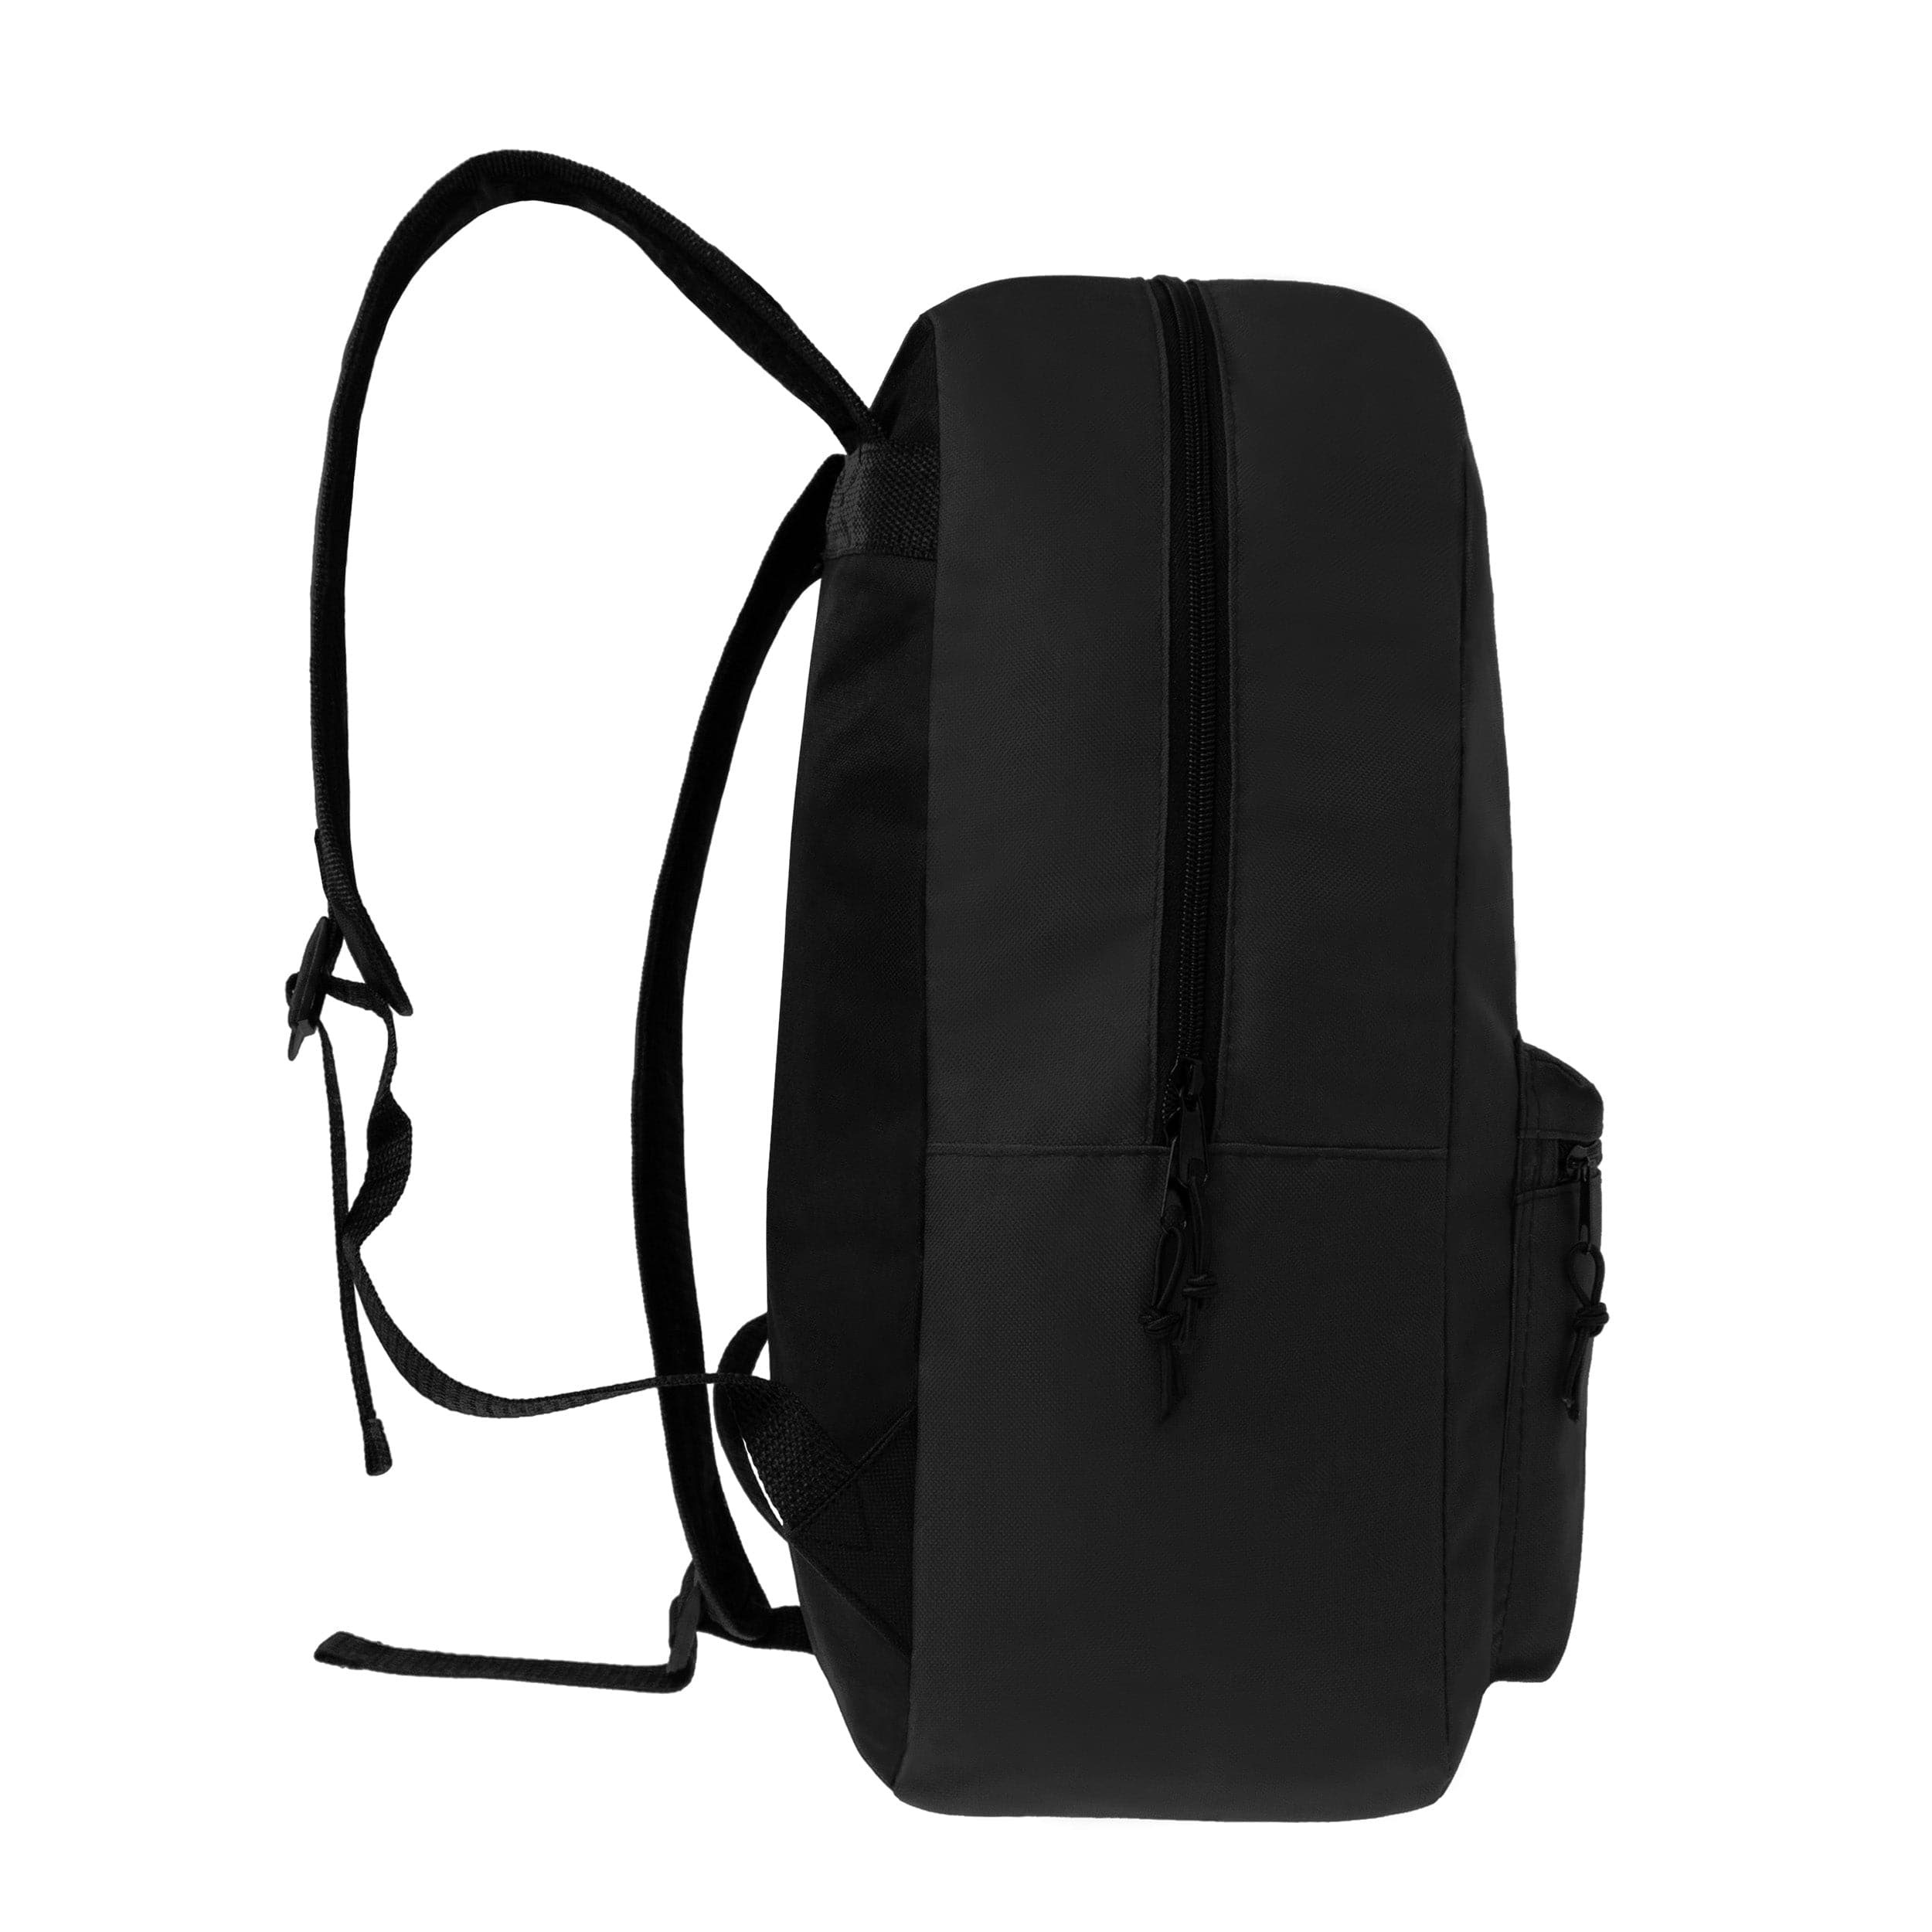 15" Kids Basic Wholesale Backpack in Black - Bulk Case of 24